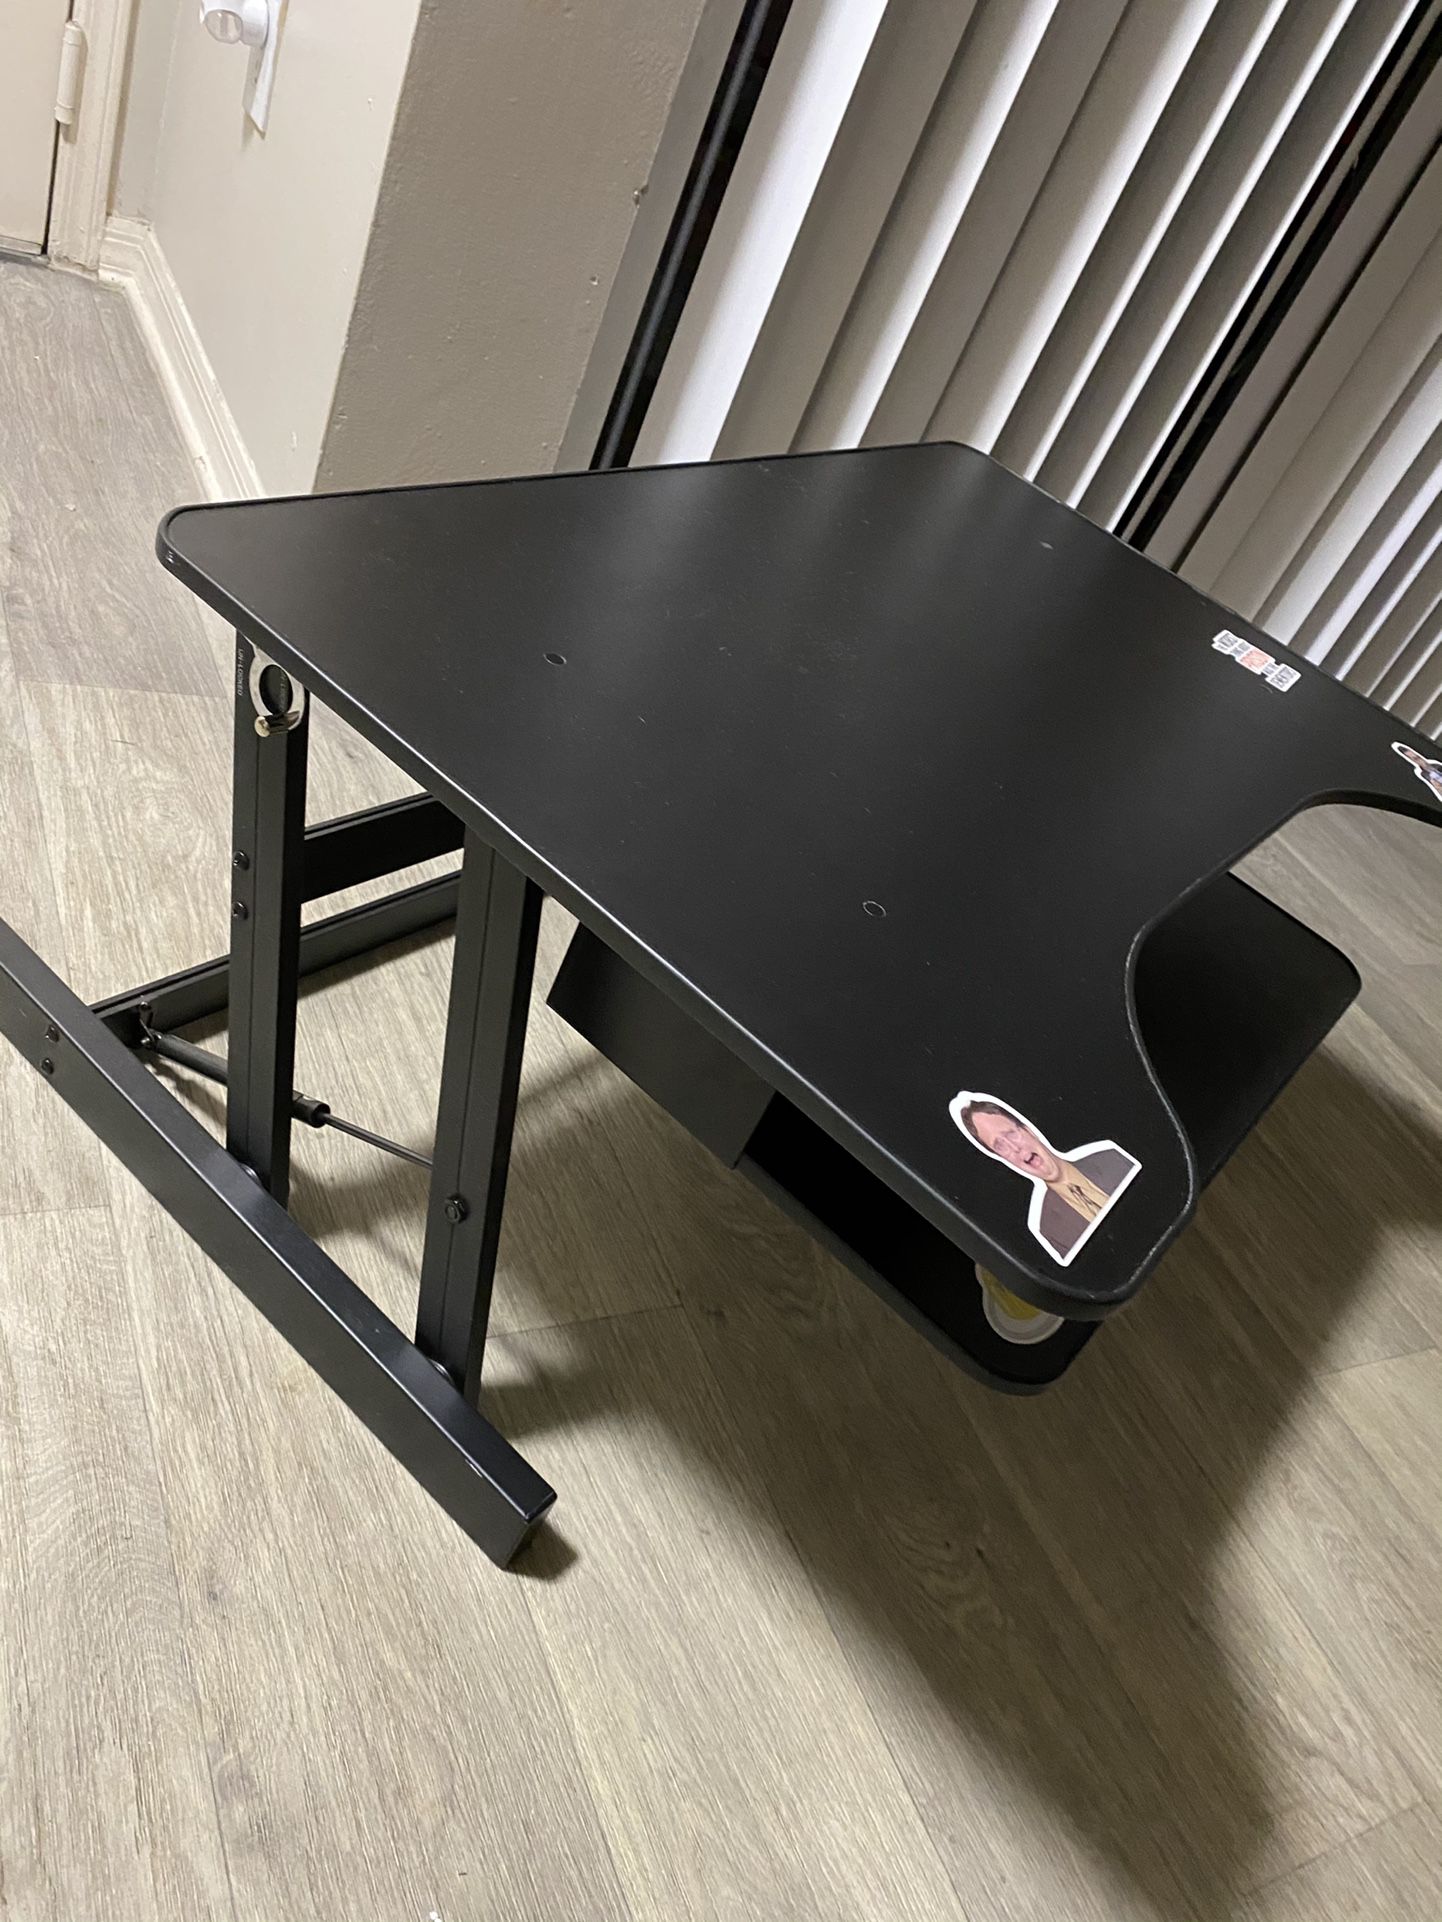 Desktop adjustable standing desk